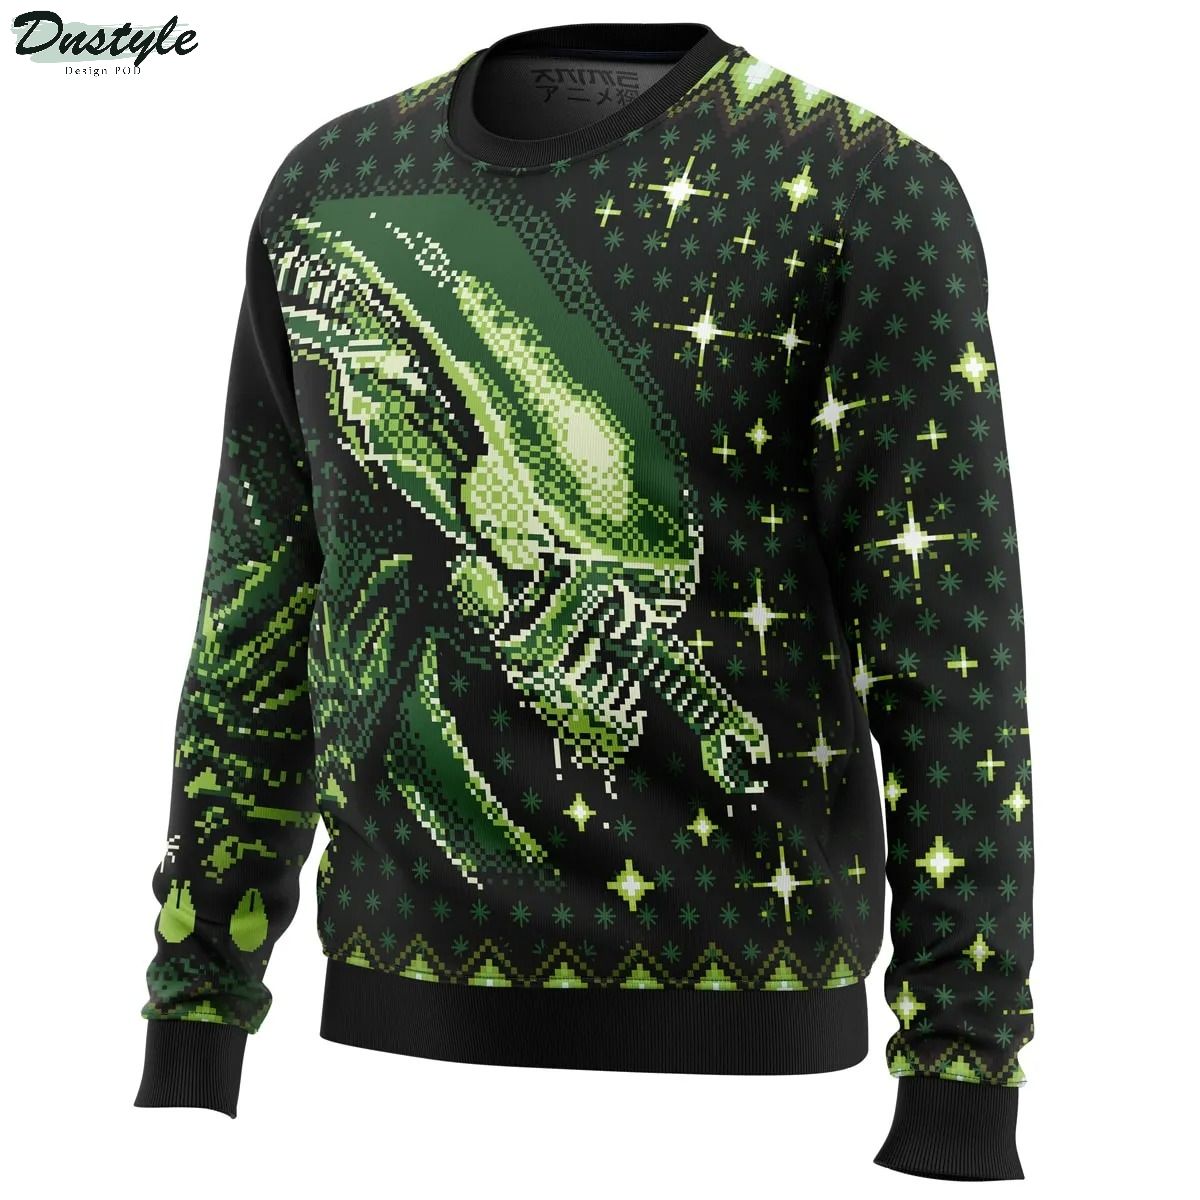 Xenomorph Alien Ugly Christmas Sweater 1